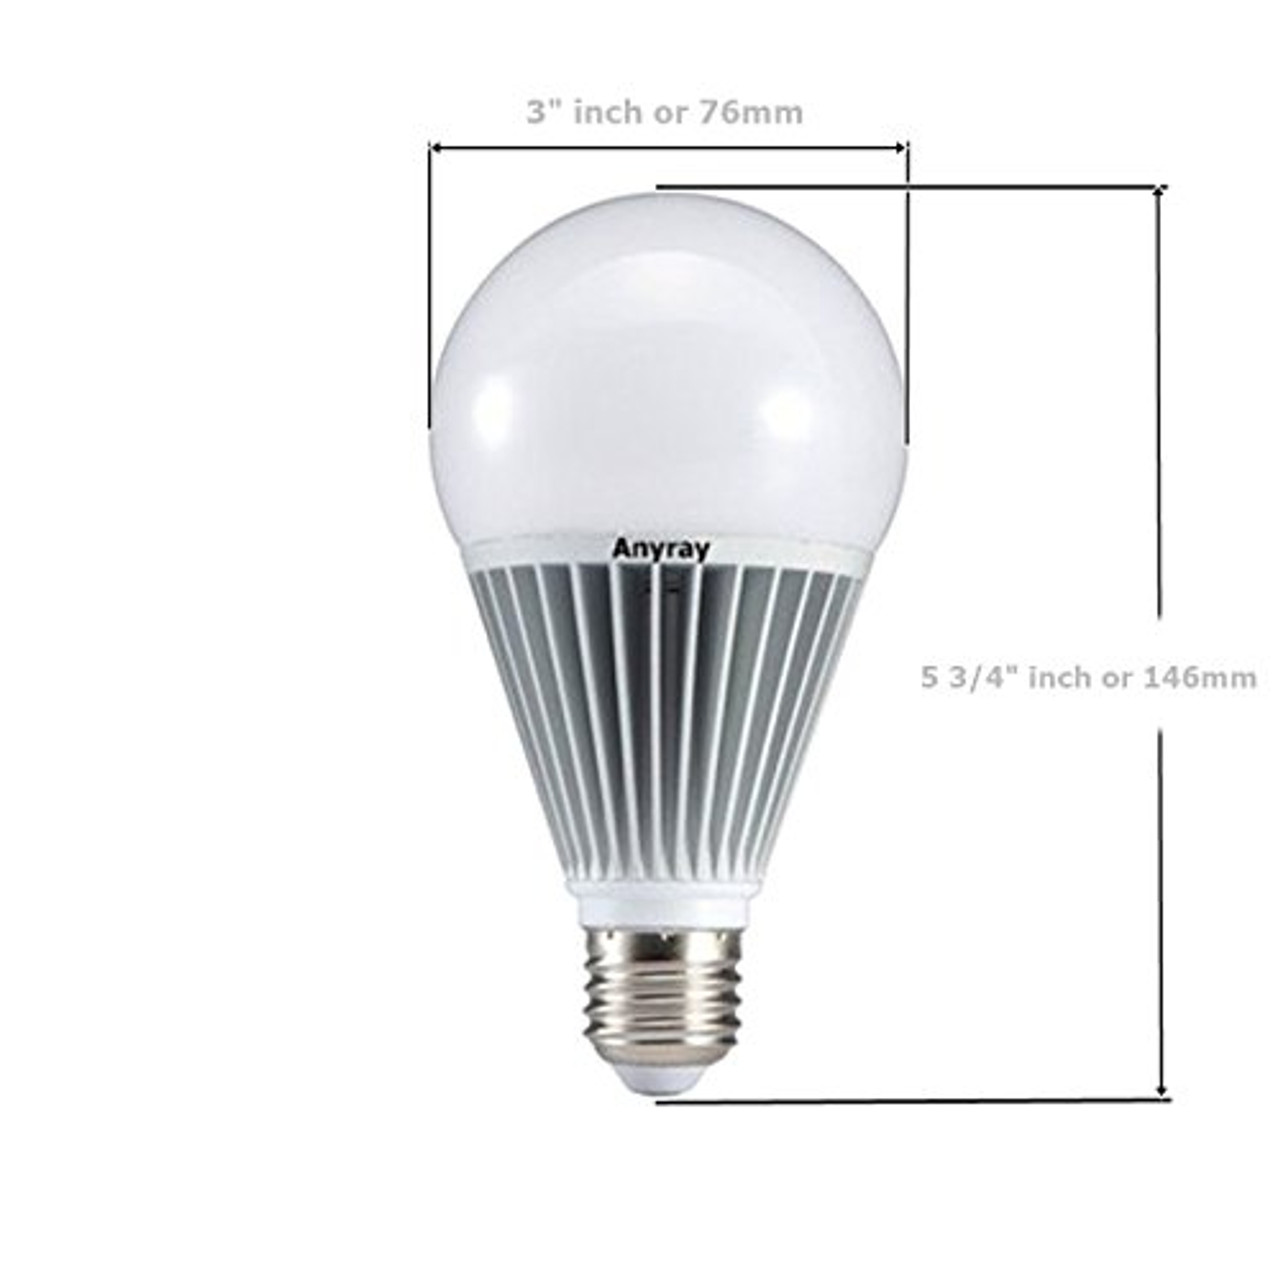 Behoren Talloos vroegrijp Anyray 100 Watt Equal LED Light Bulb 1300 Lumen 15 Watt Cool White (100W  Replacement) Dimmable